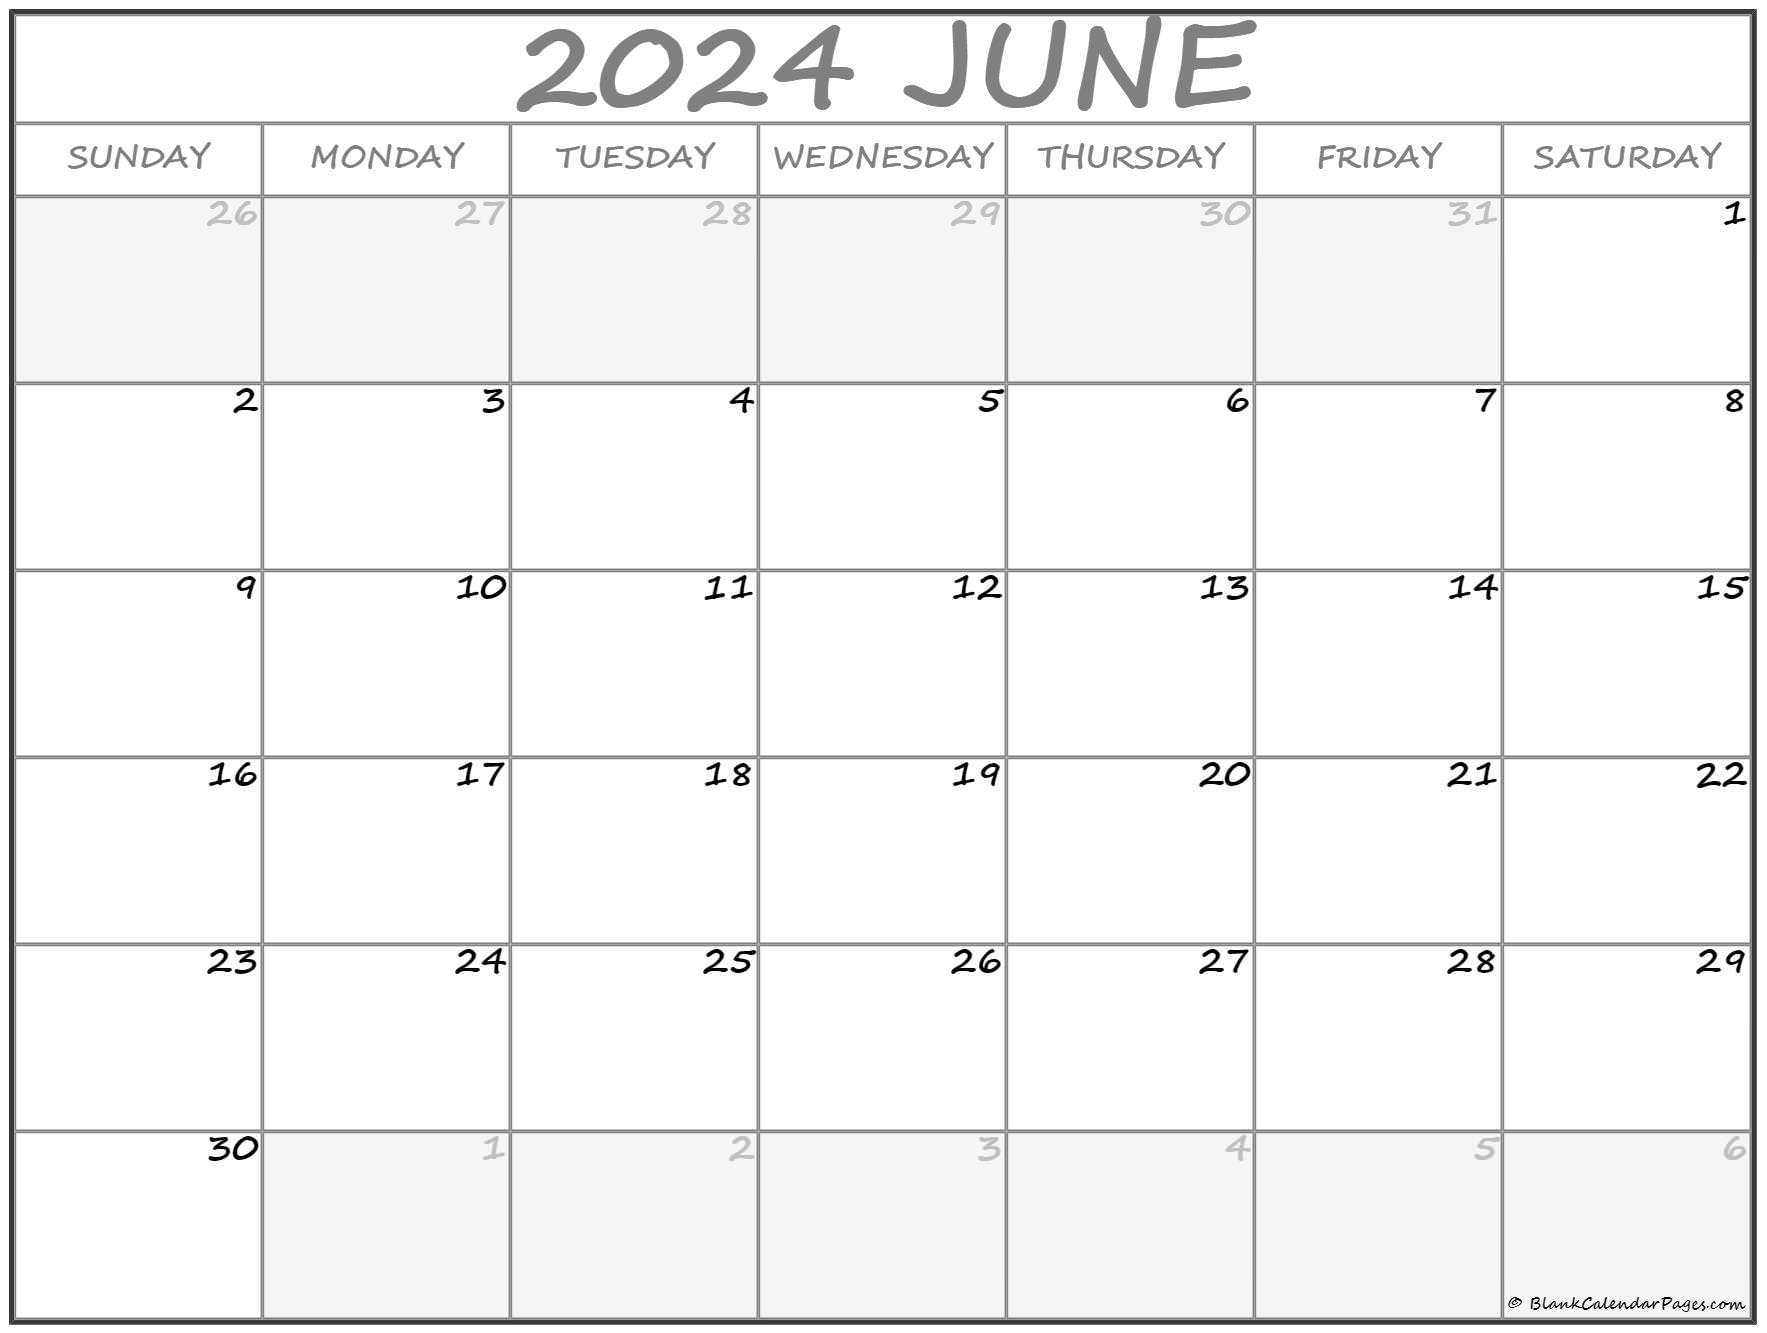 June 2021 calendar free printable calendar templates